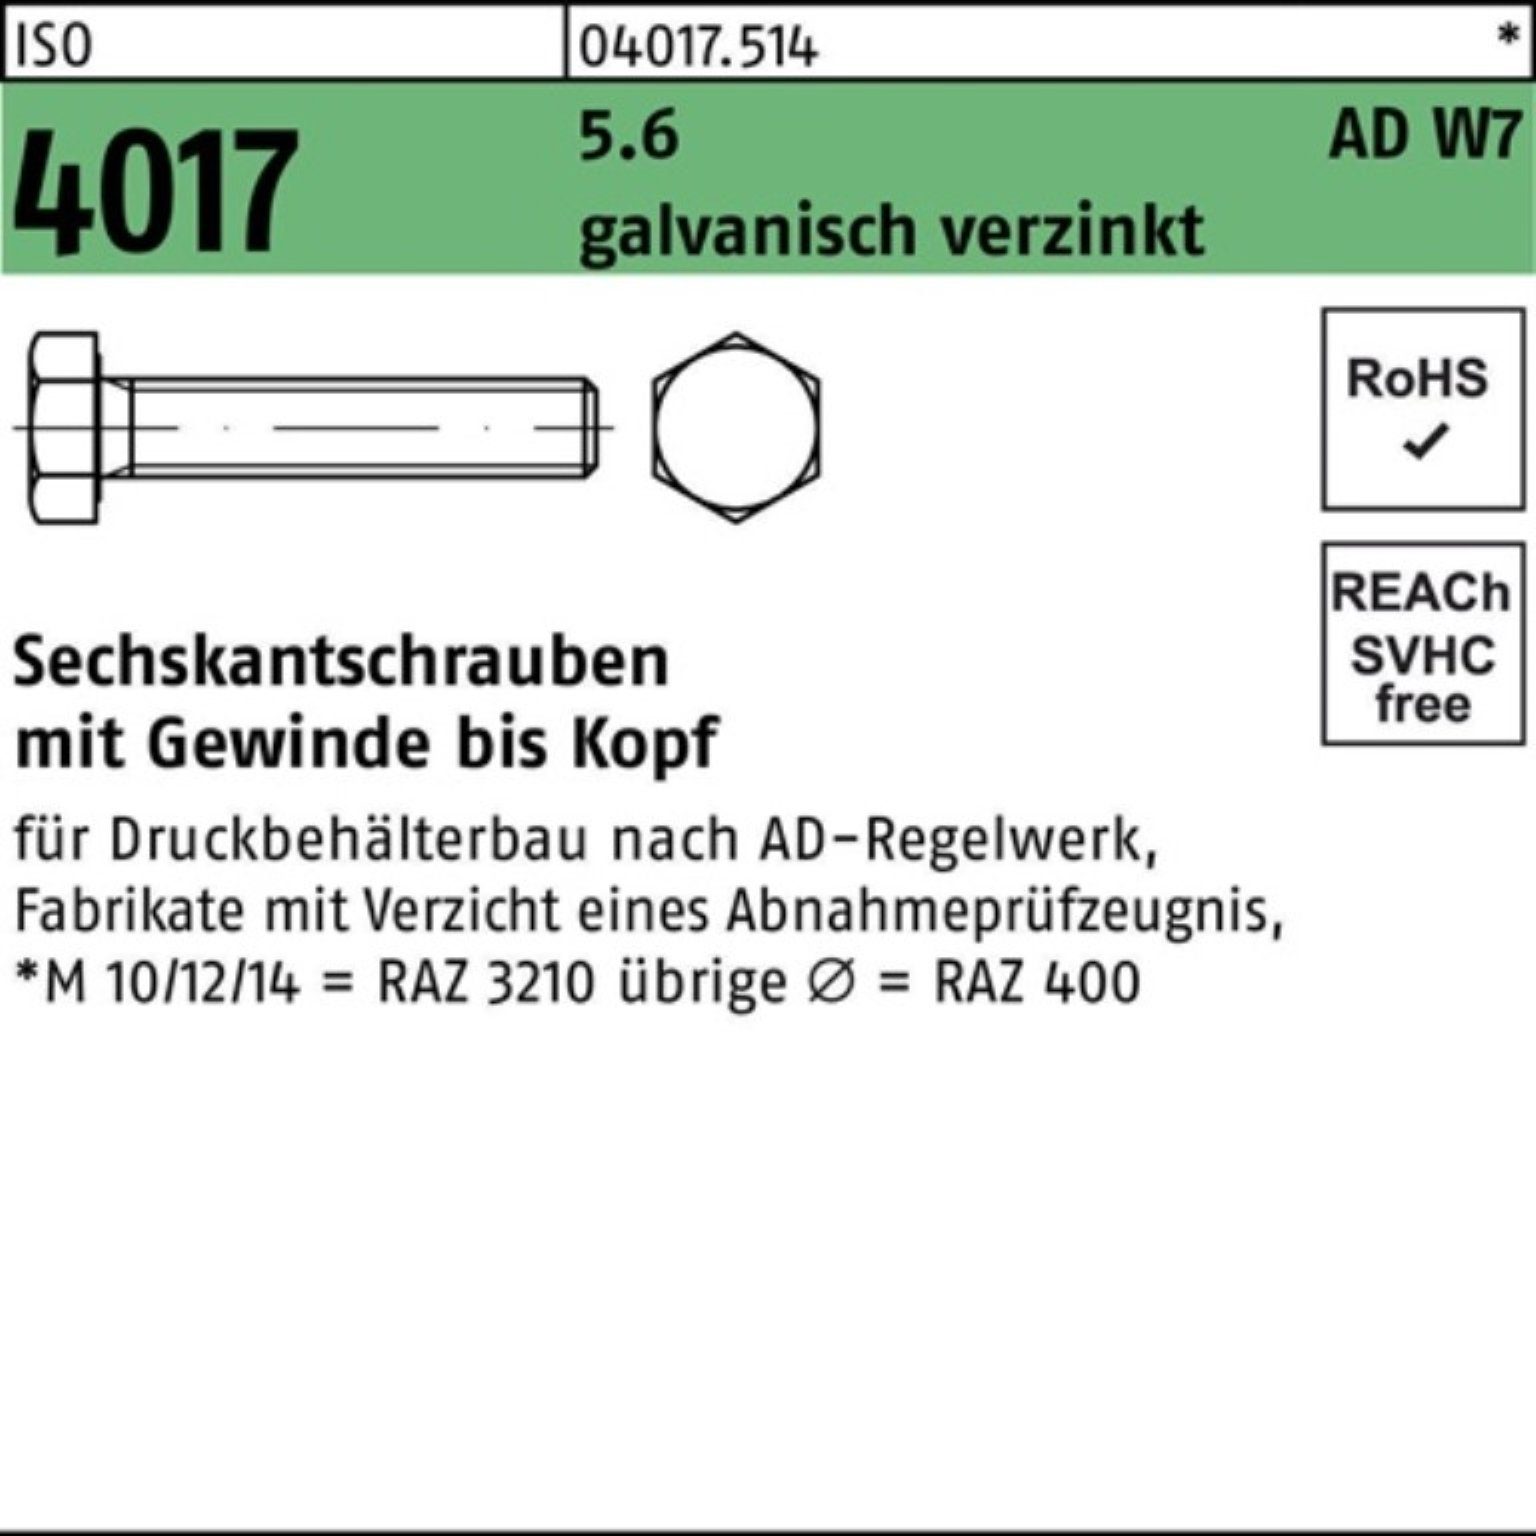 Sechskantschraube Bufab Pack ISO galv.verz. 4017 W7 M27x AD 100er VG 5.6 Sechskantschraube 120